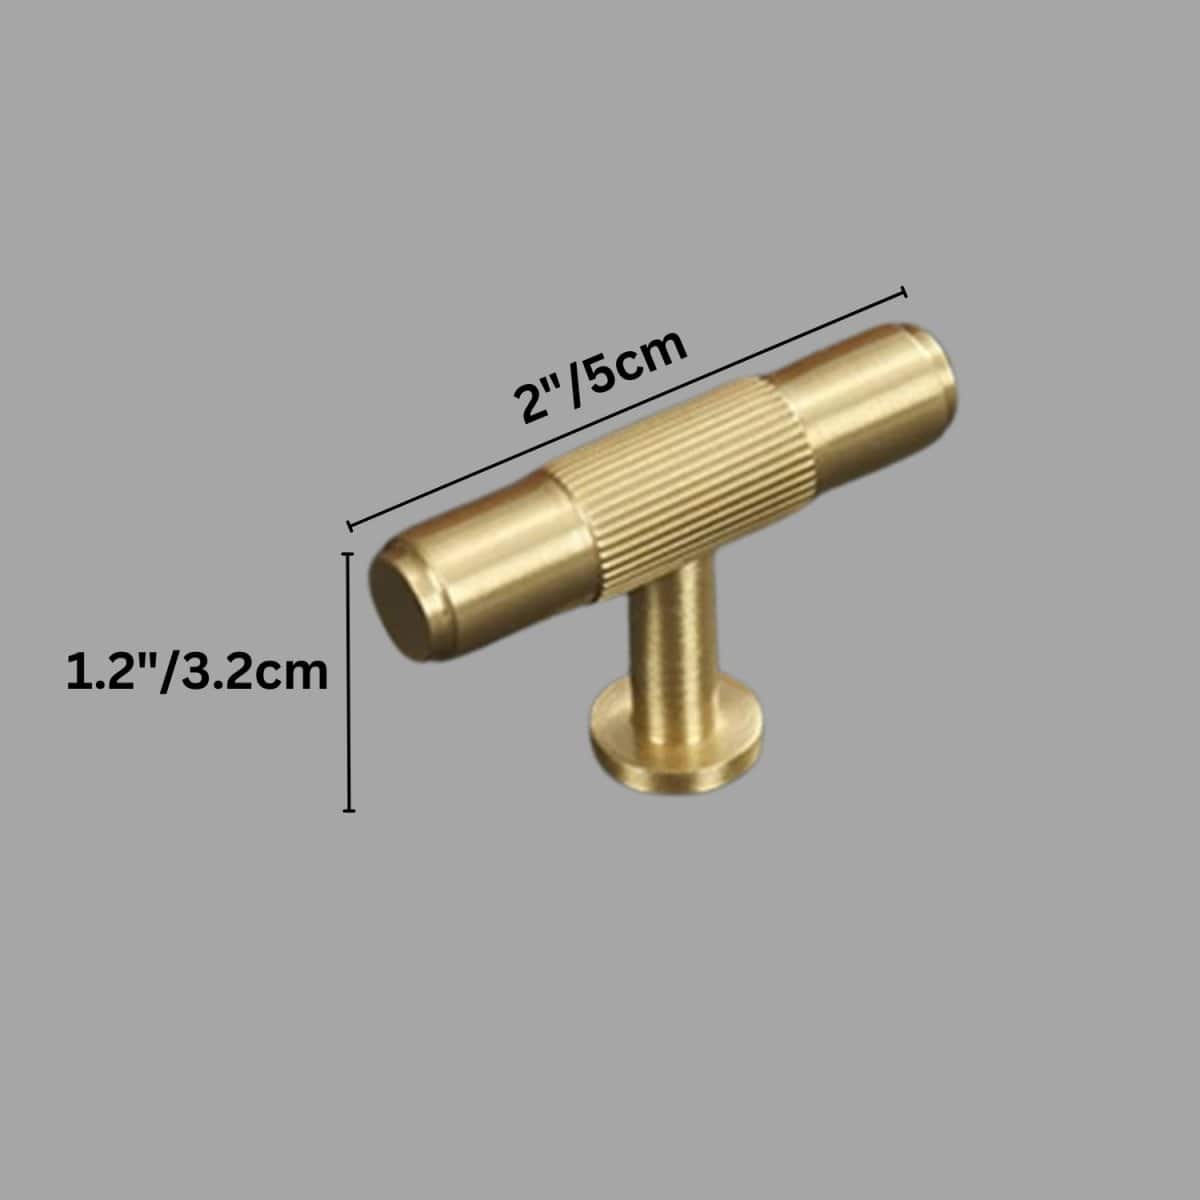 Residence Supply T Knob: 2" x 1.2" / 5 x 3.2cm / Brass Cepo Knob & Pull Bar